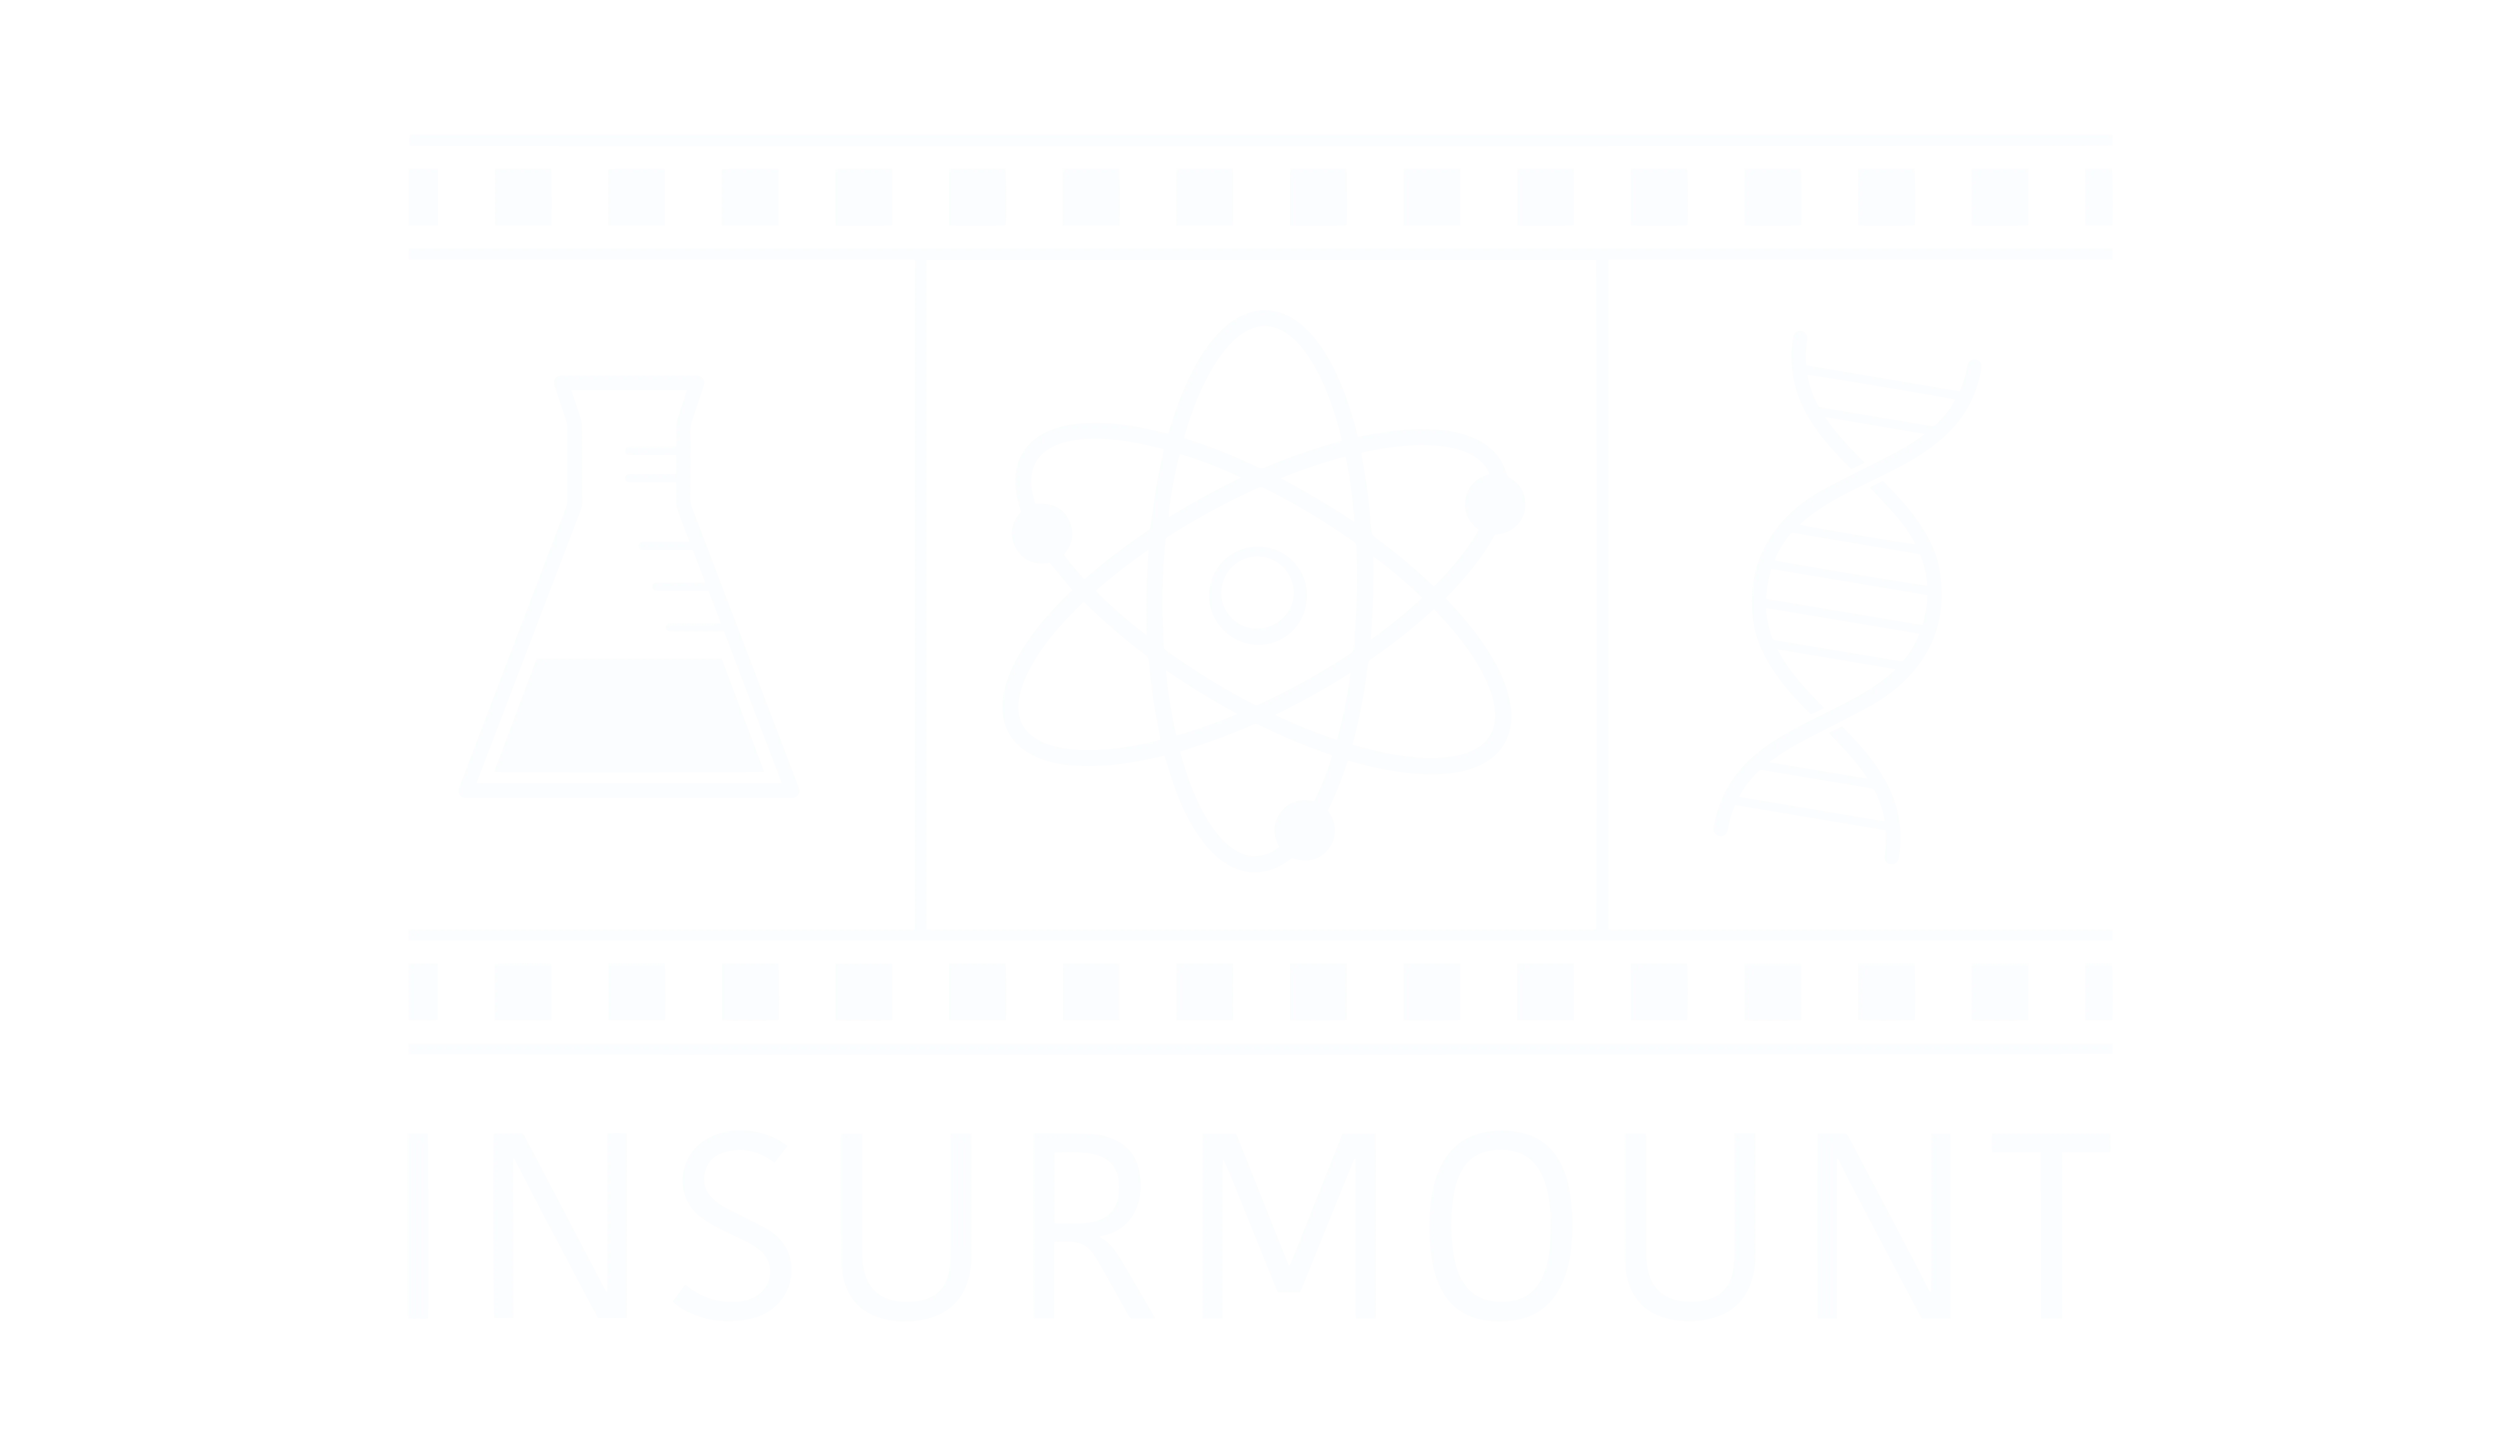 Insurmount-logo